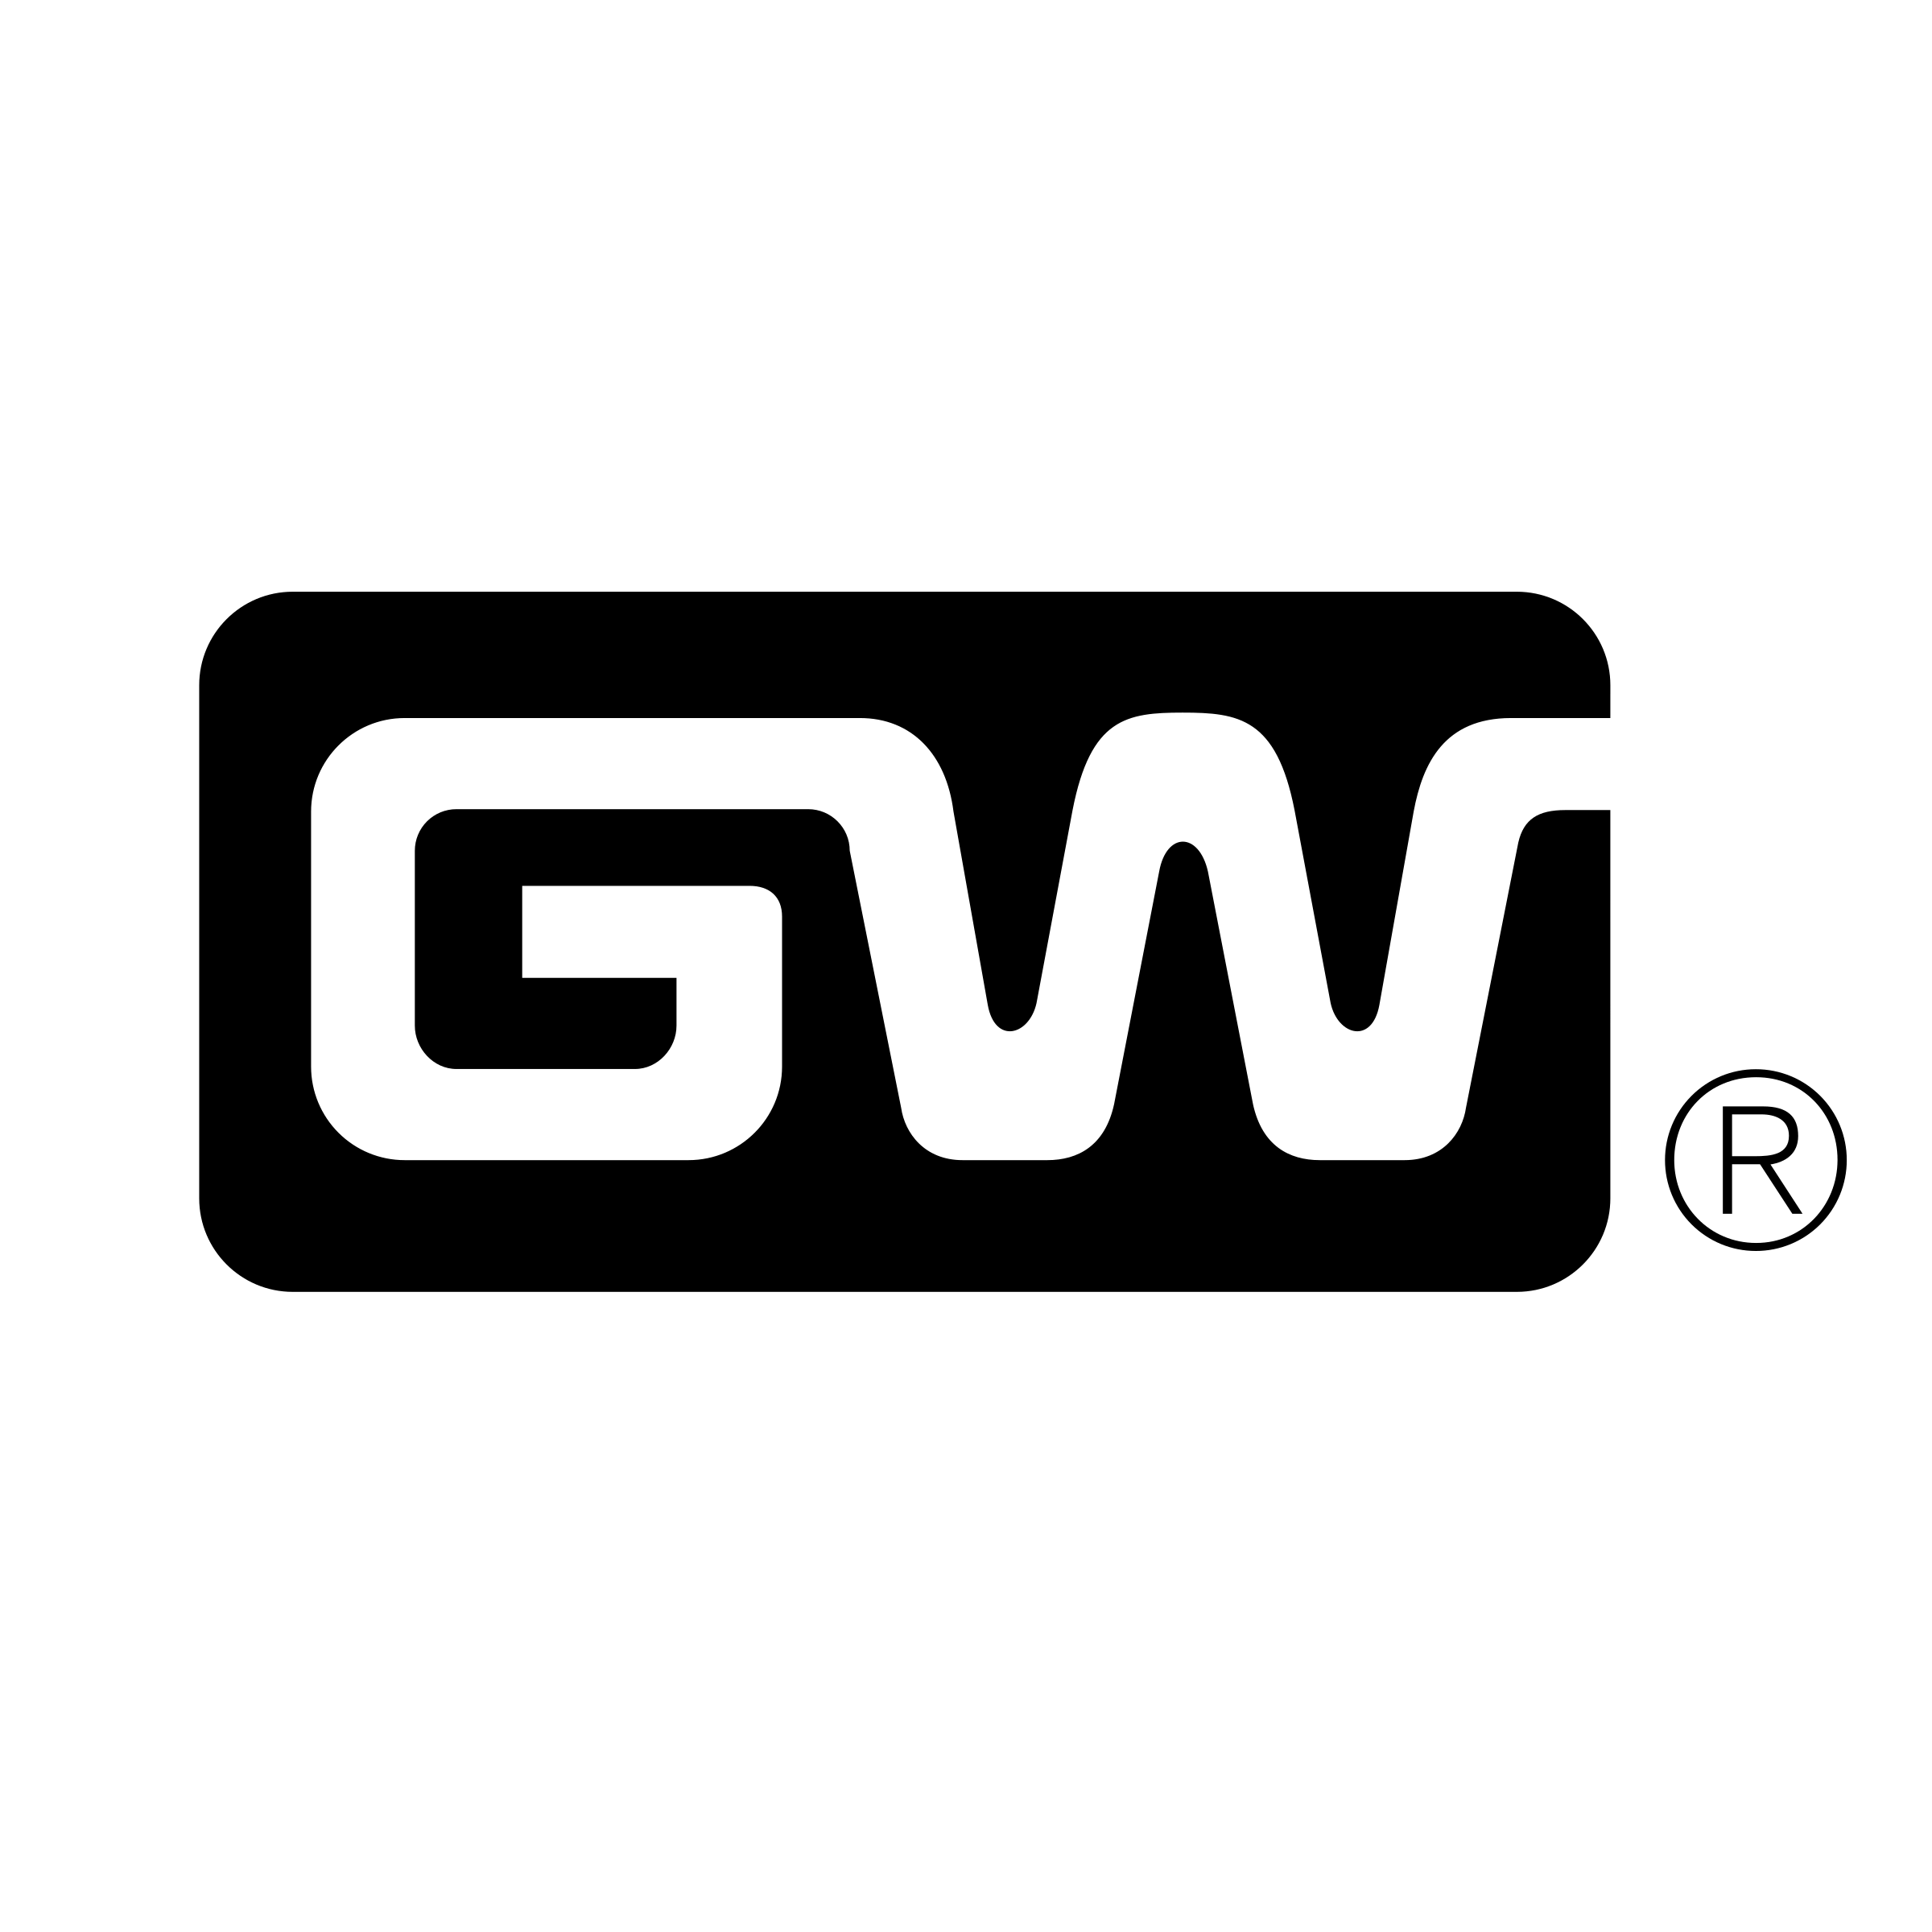 GW Logo - GW Logo PNG Transparent & SVG Vector - Freebie Supply